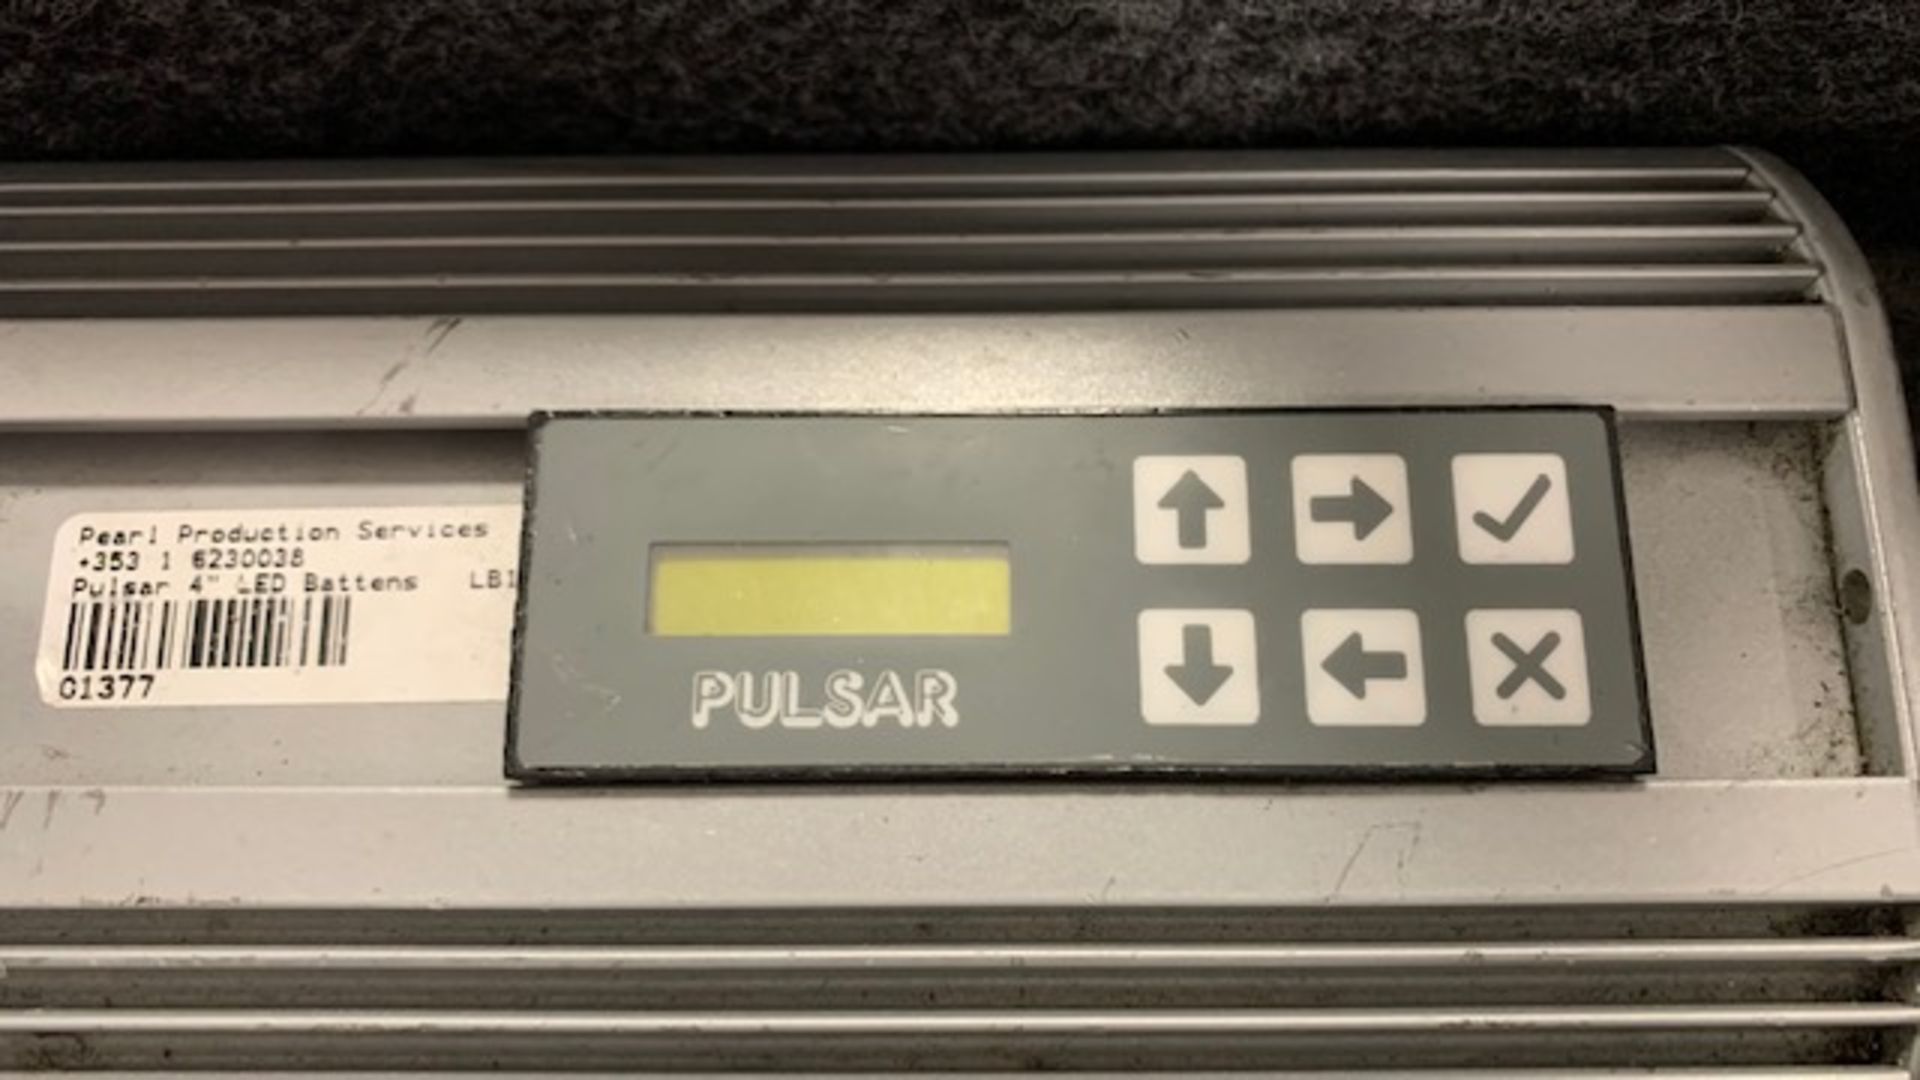 4 x Pulsar LED Bars - Ref: 667 - CL581 - Location: Altrincham WA14 - Image 3 of 4